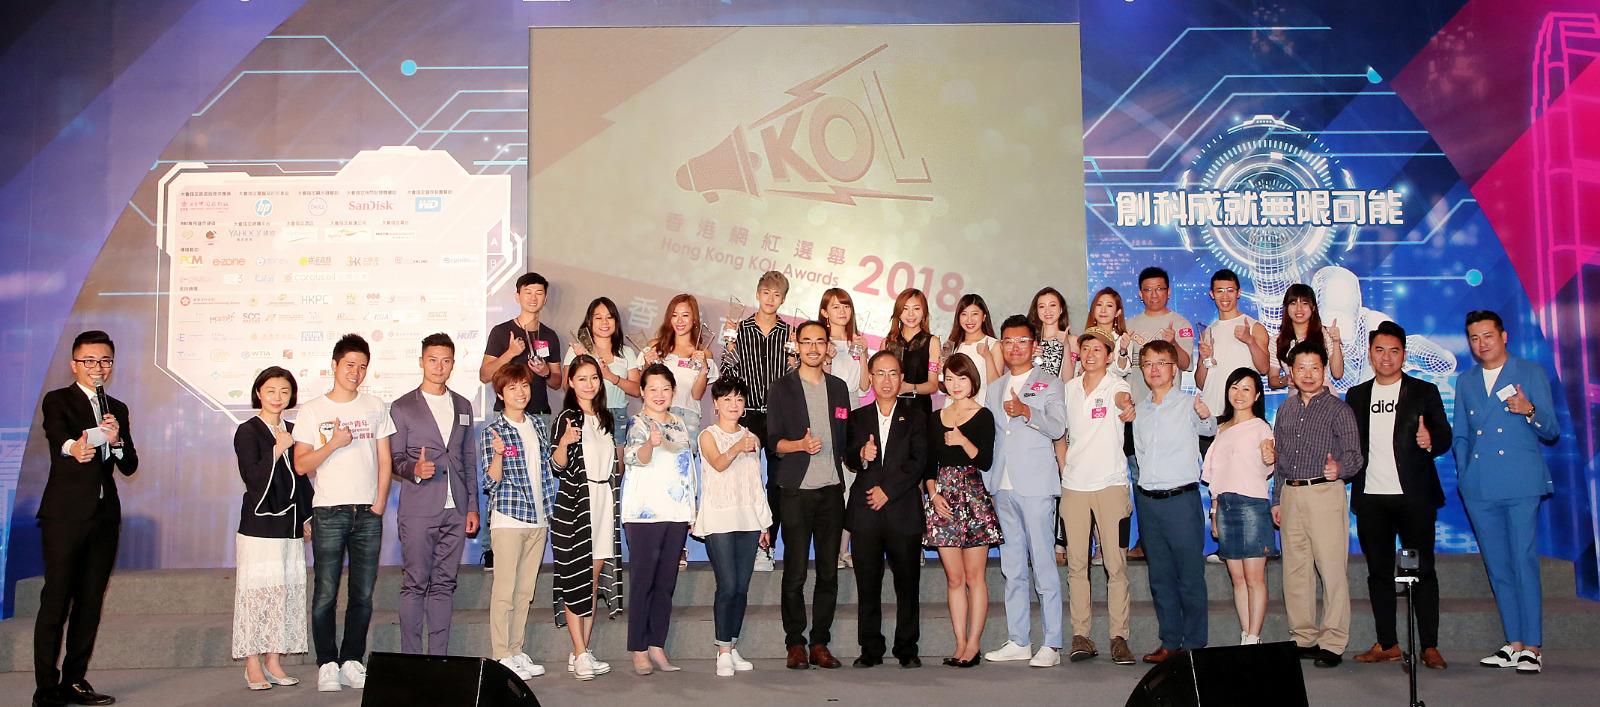 kol award competition1